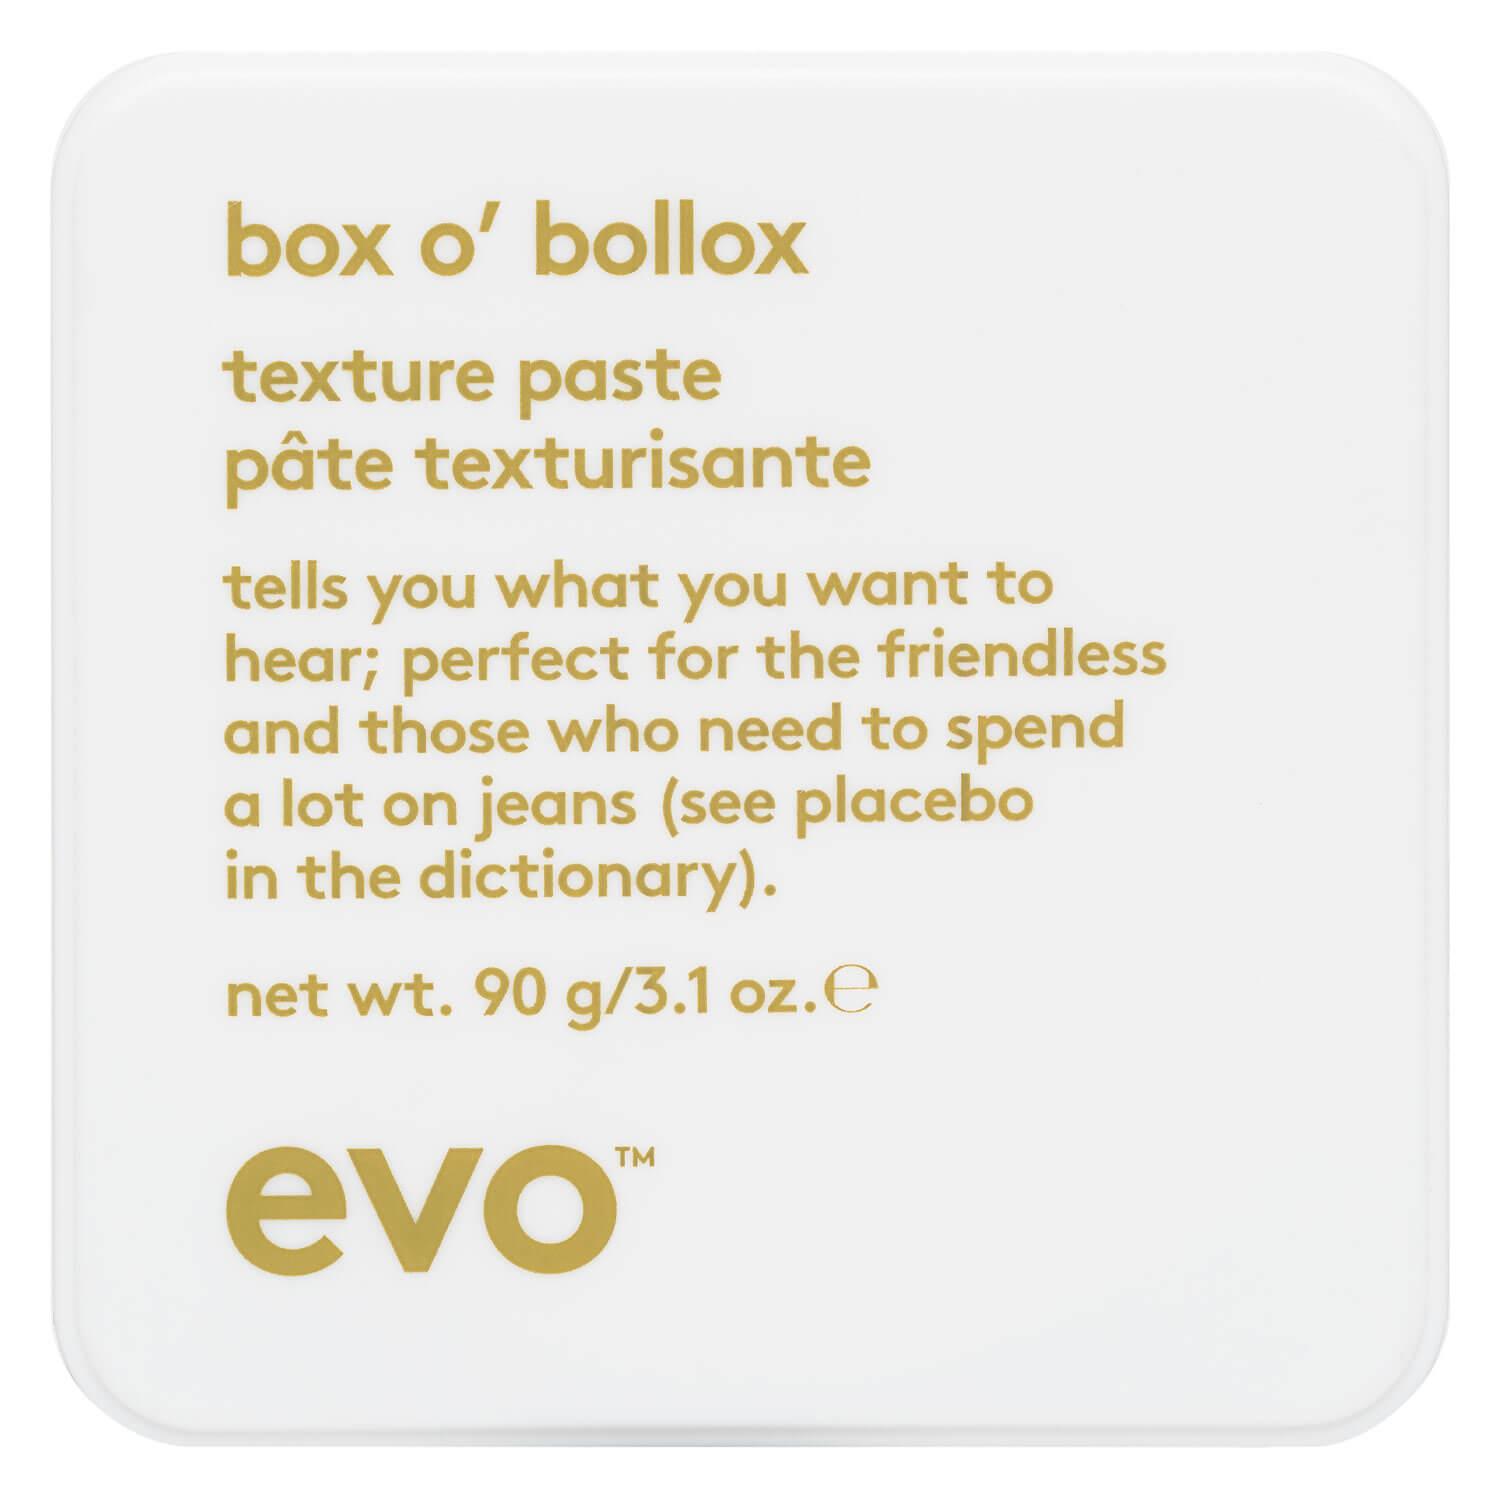 evo style - box o’ bollox texture paste